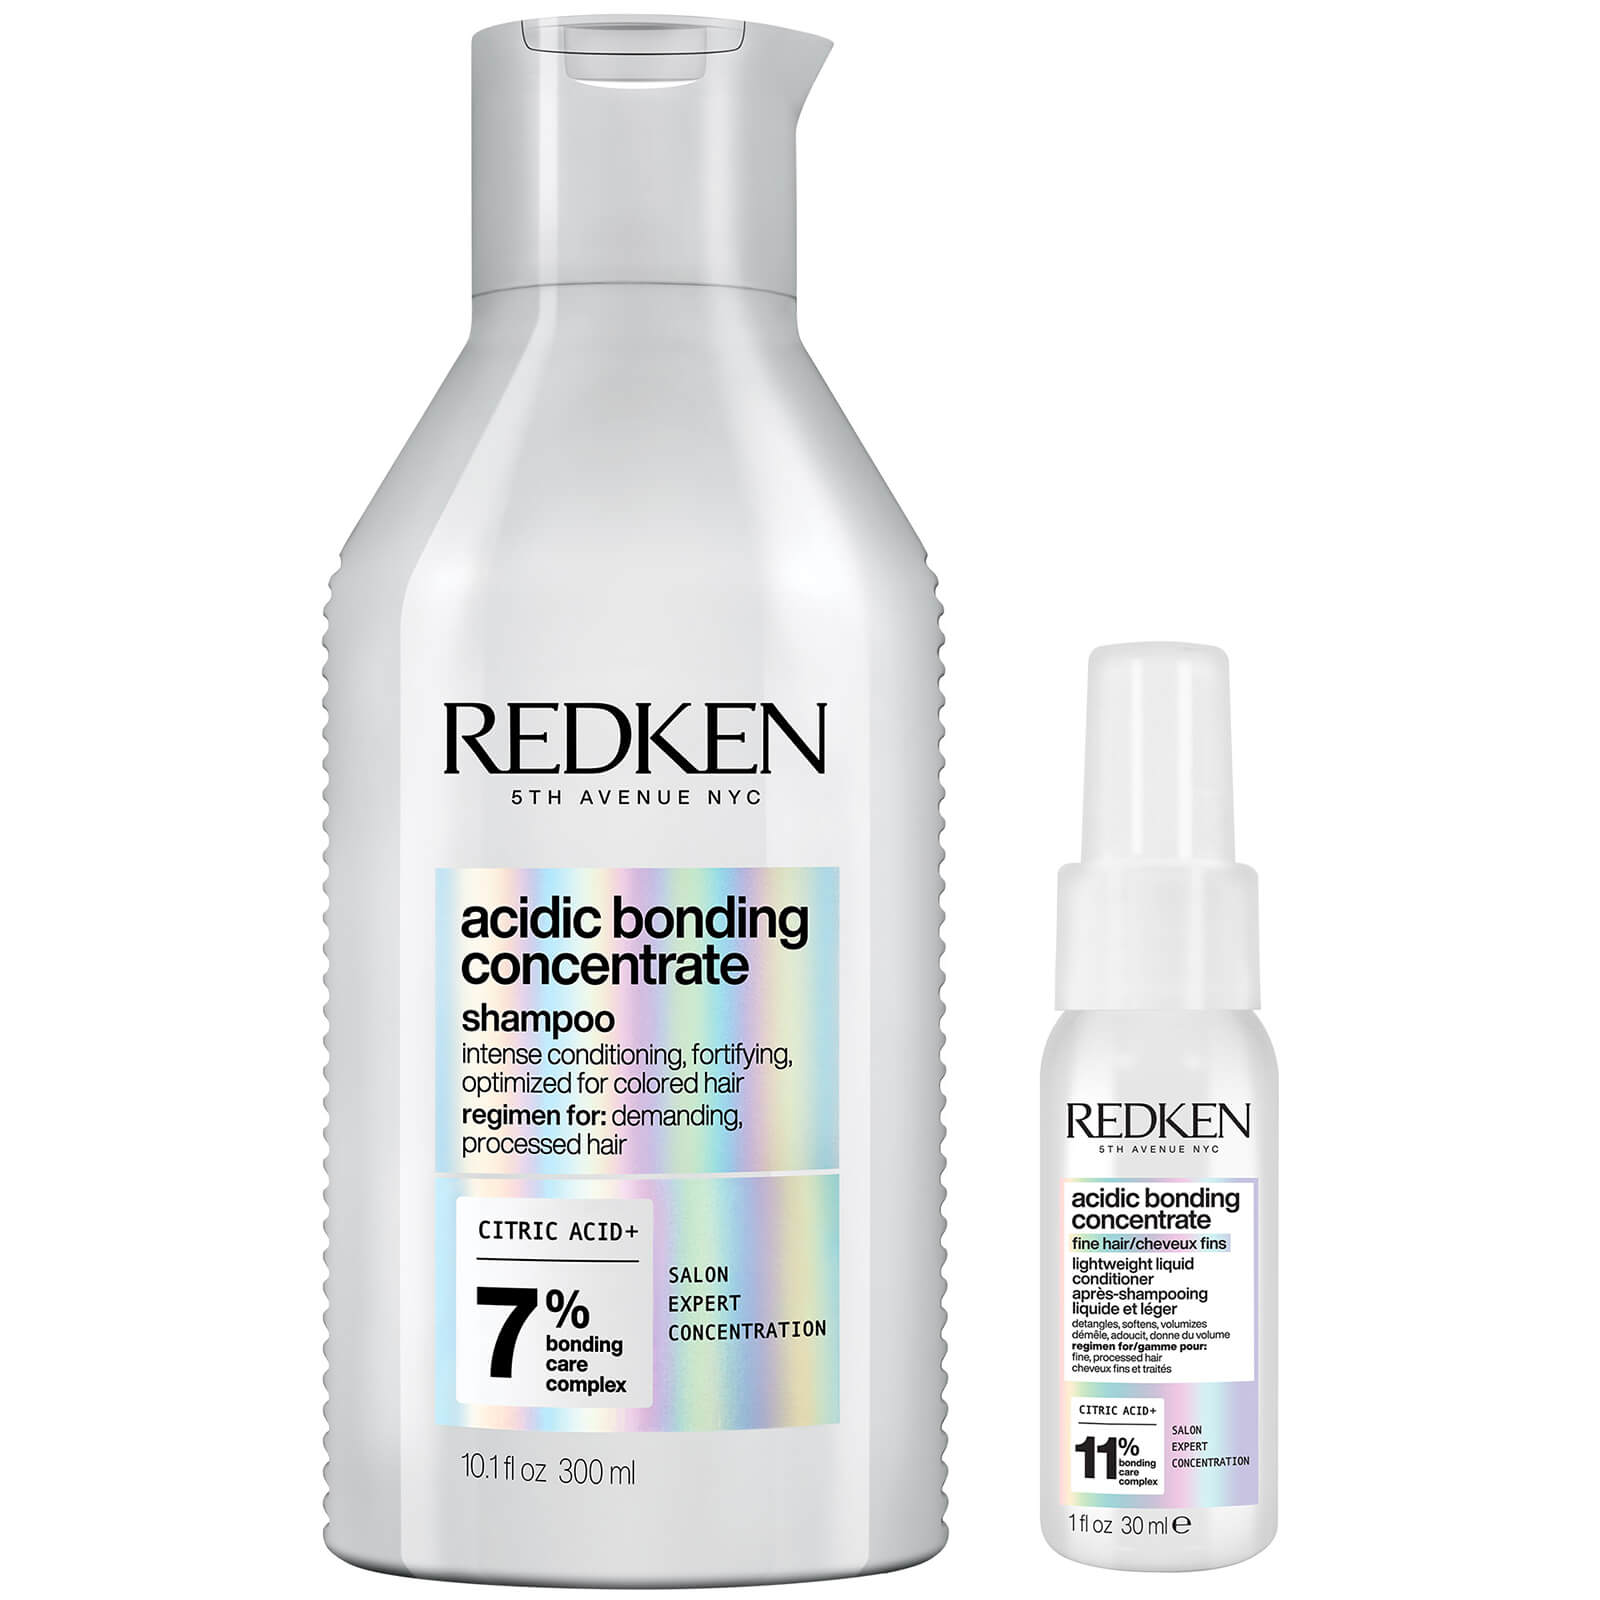 Redken Acidic Bonding Concentrate Bond Repair Shampoo 300ml and Lightweight Liquid Conditioner 30ml Bundle